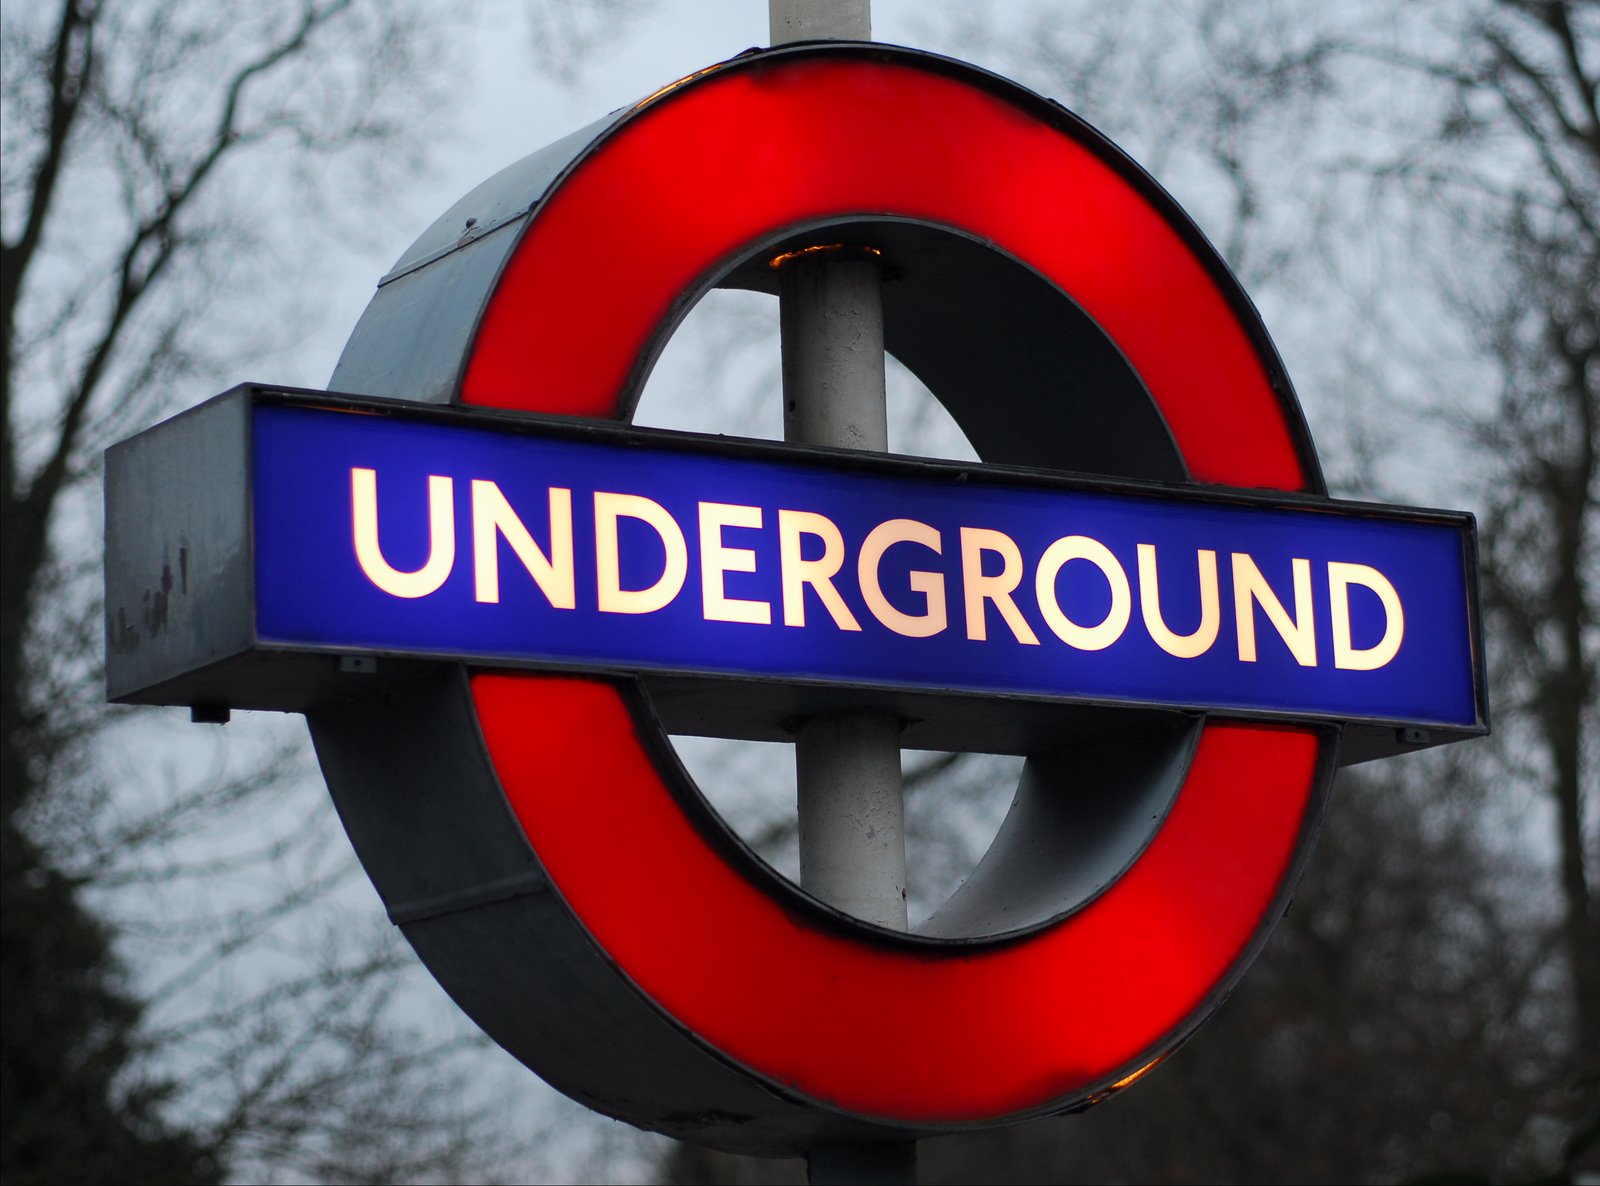 [Underground_roundel_sign_at_Epping.jpg]